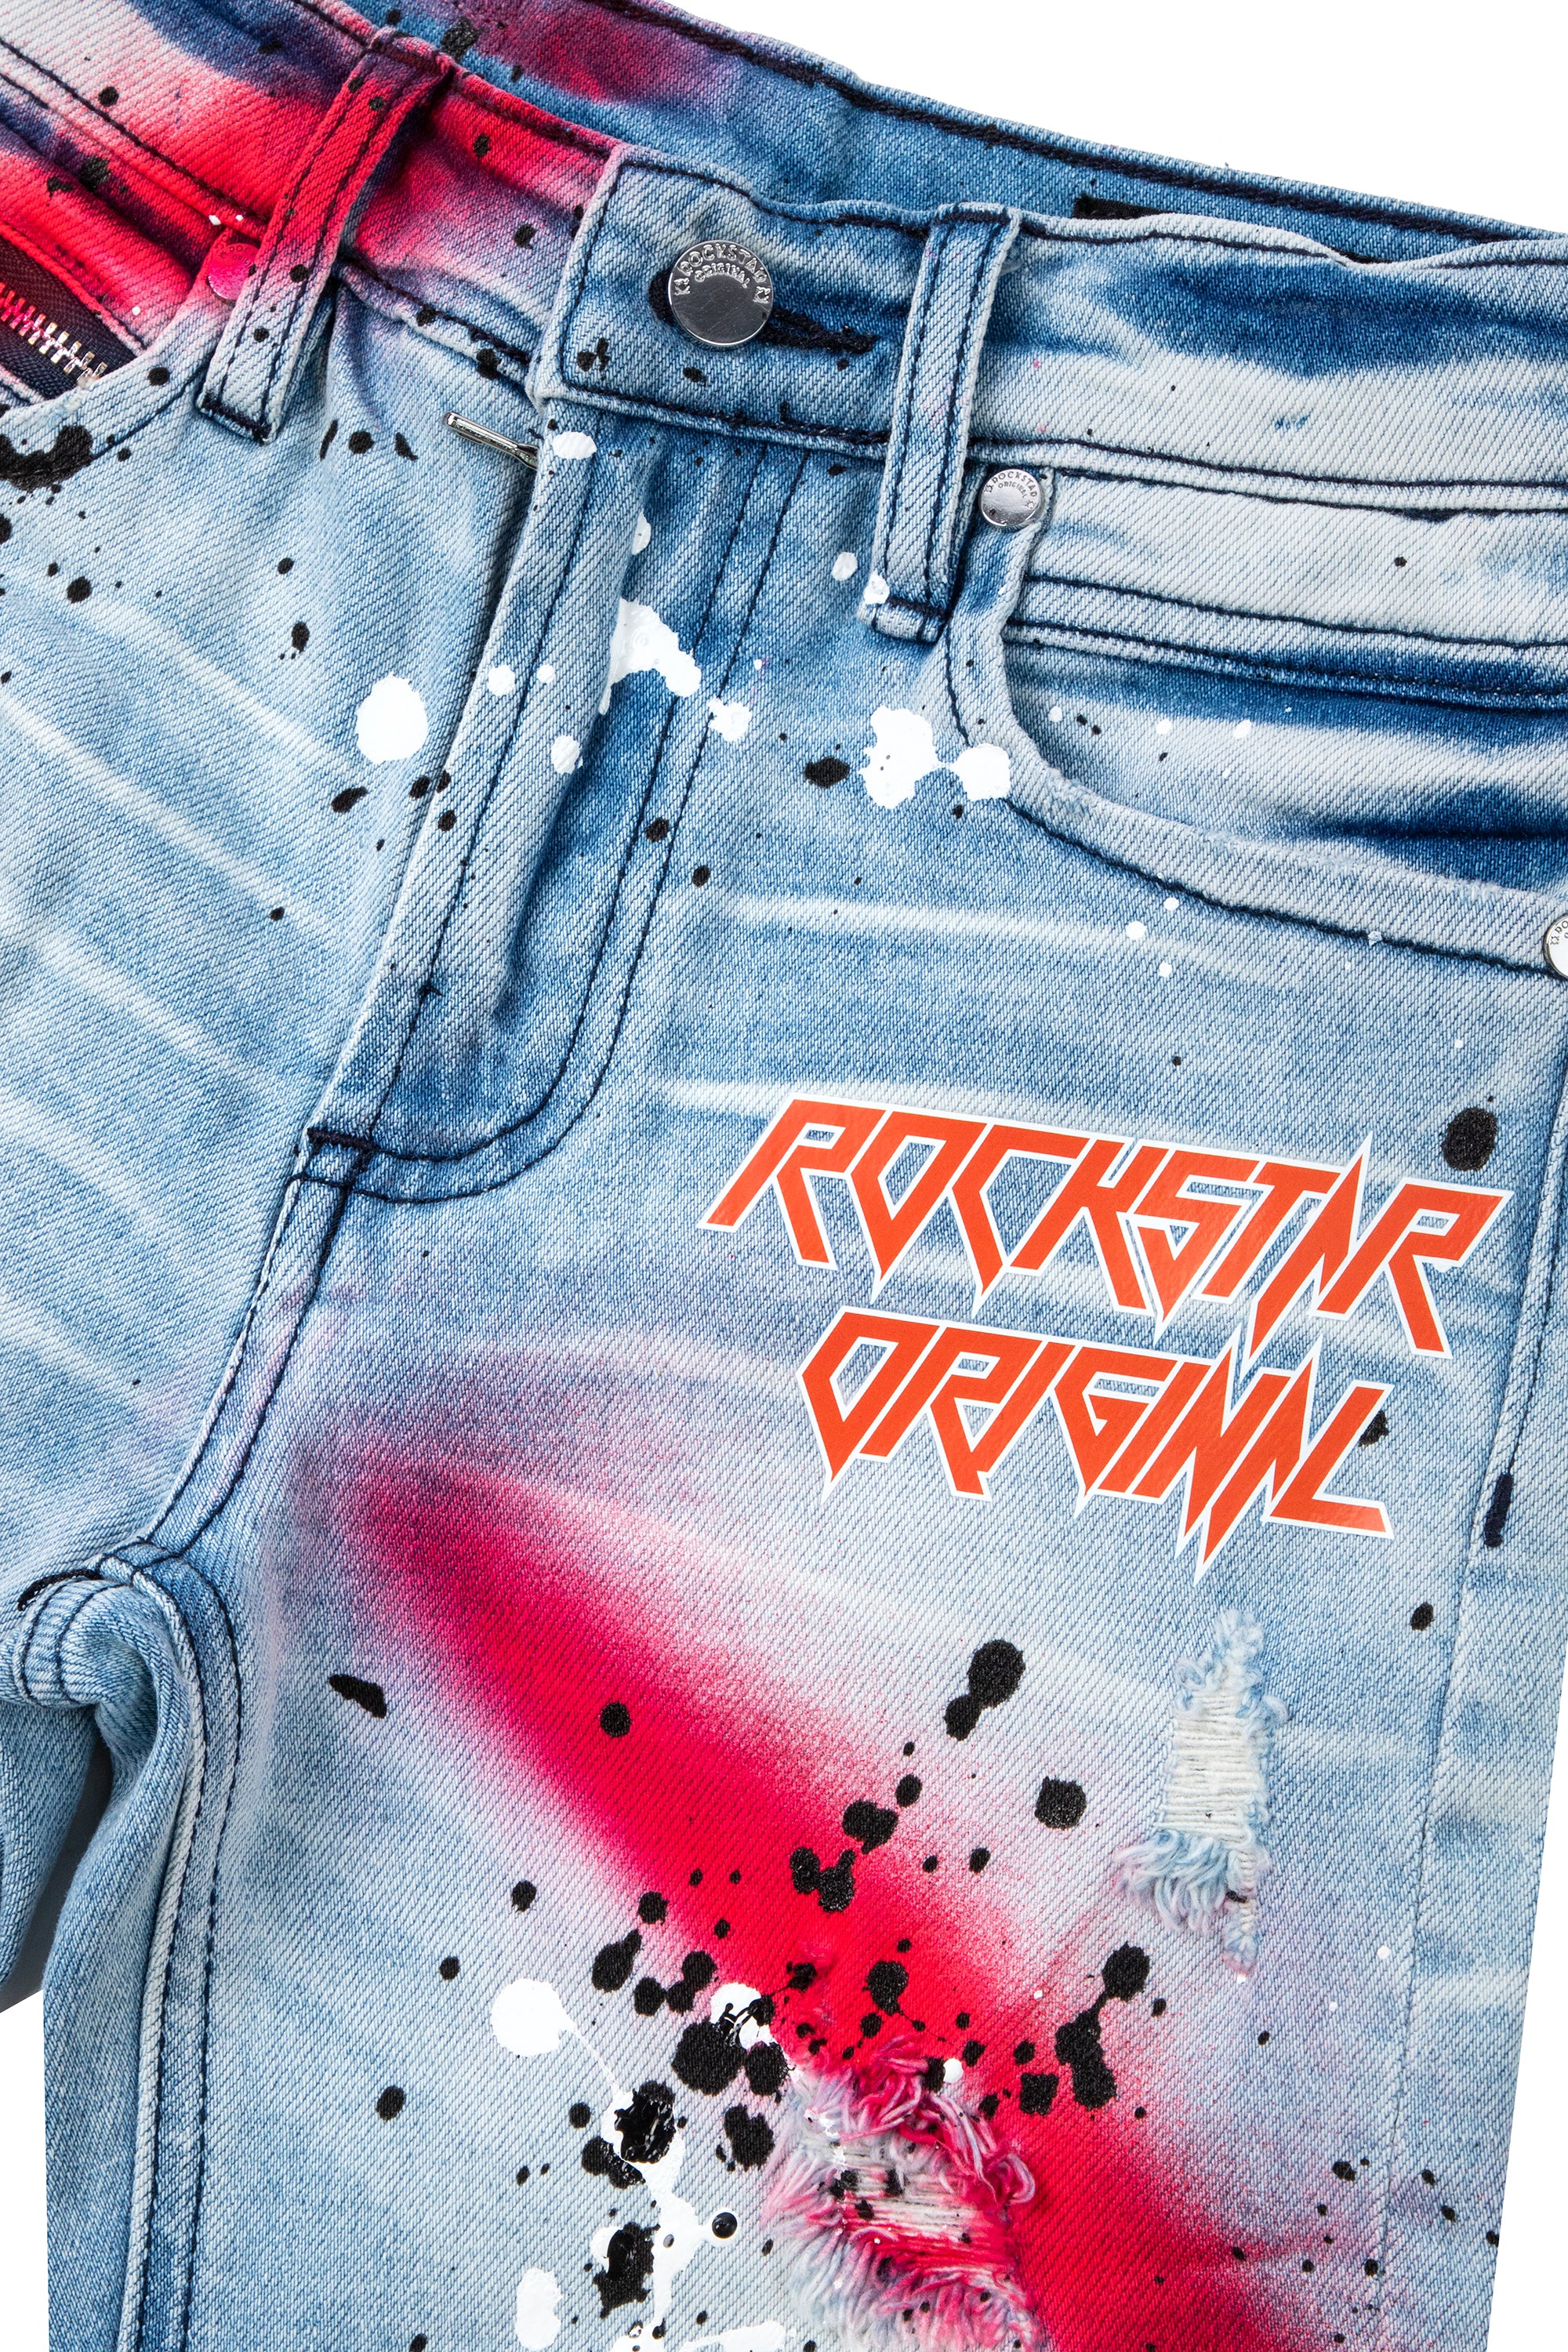 Rockstar Jeans That Reboots Your Vogue Statement 